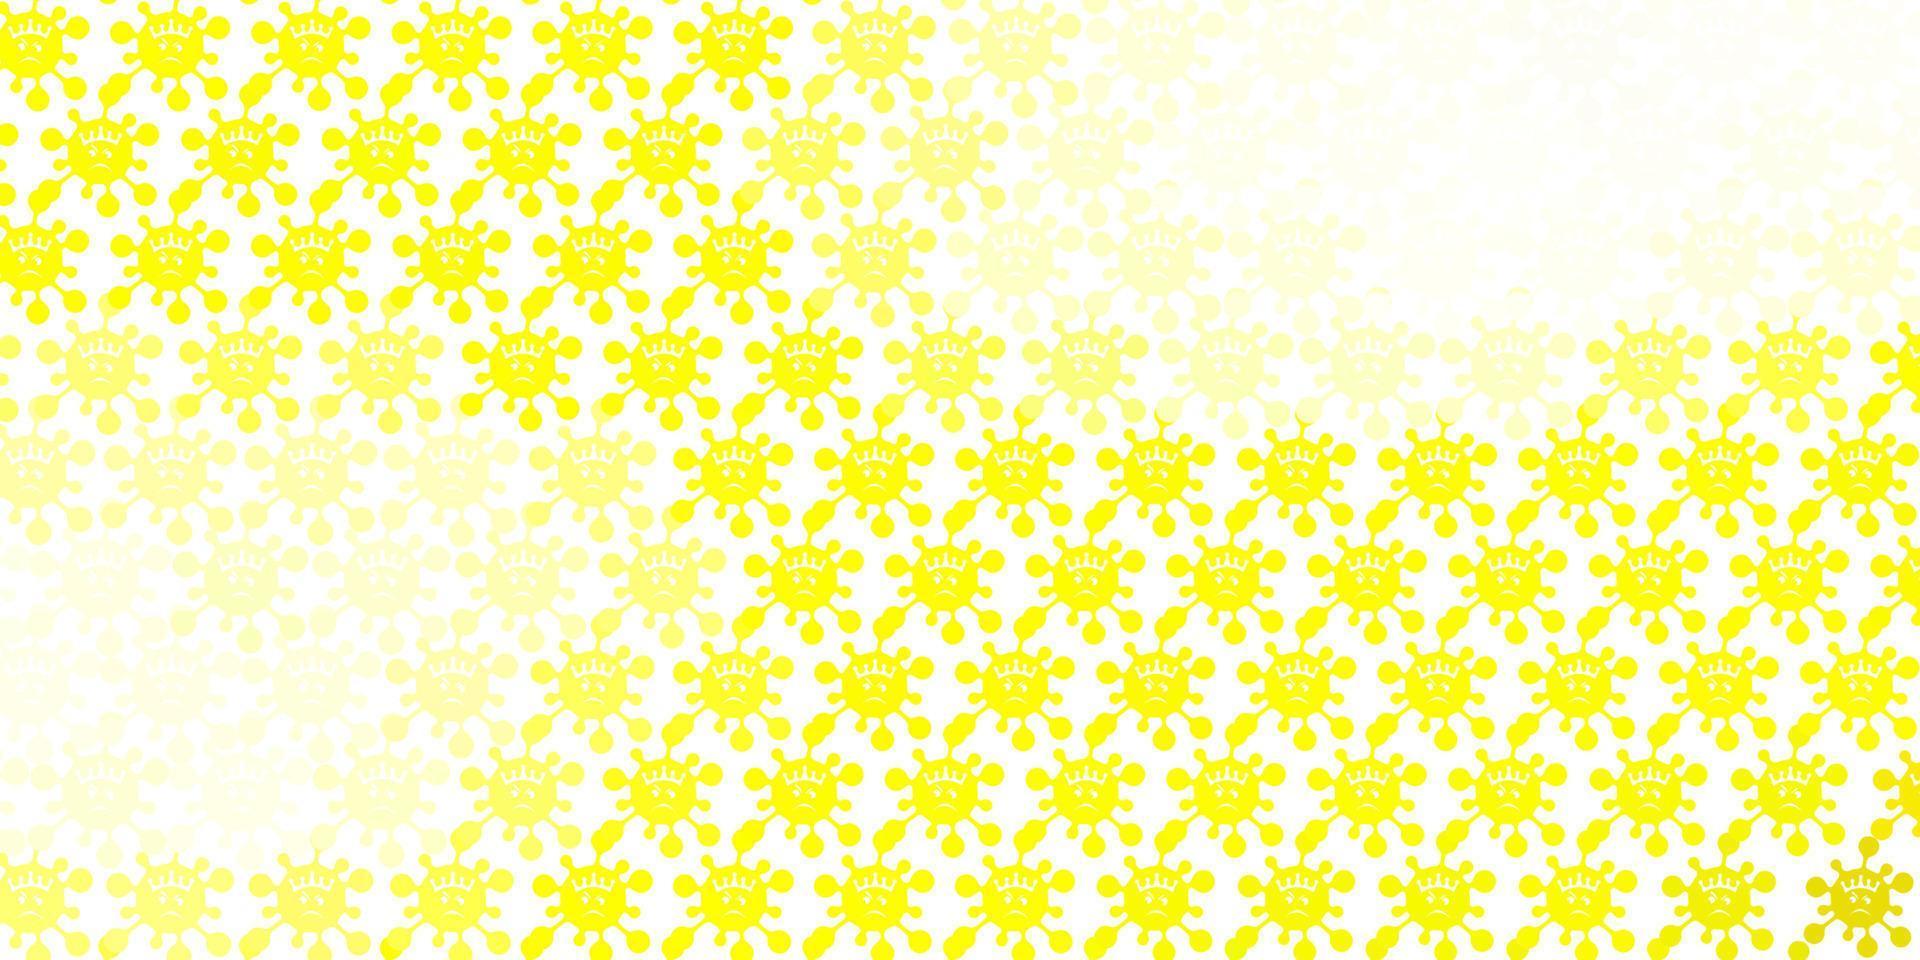 Patrón de vector amarillo claro con elementos de coronavirus.